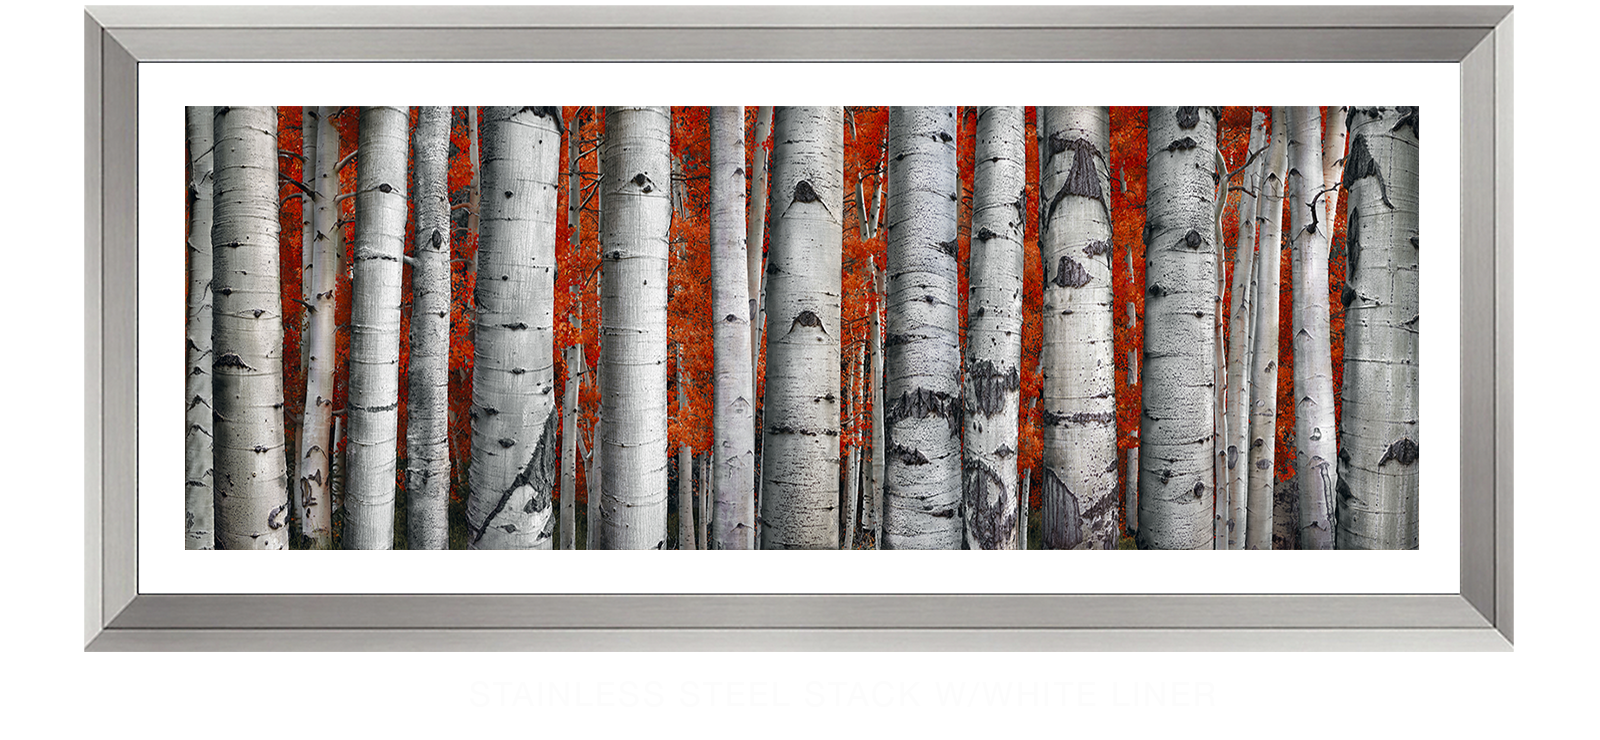 6ASPEN Stainless Steel Stack w_Wht Liner T